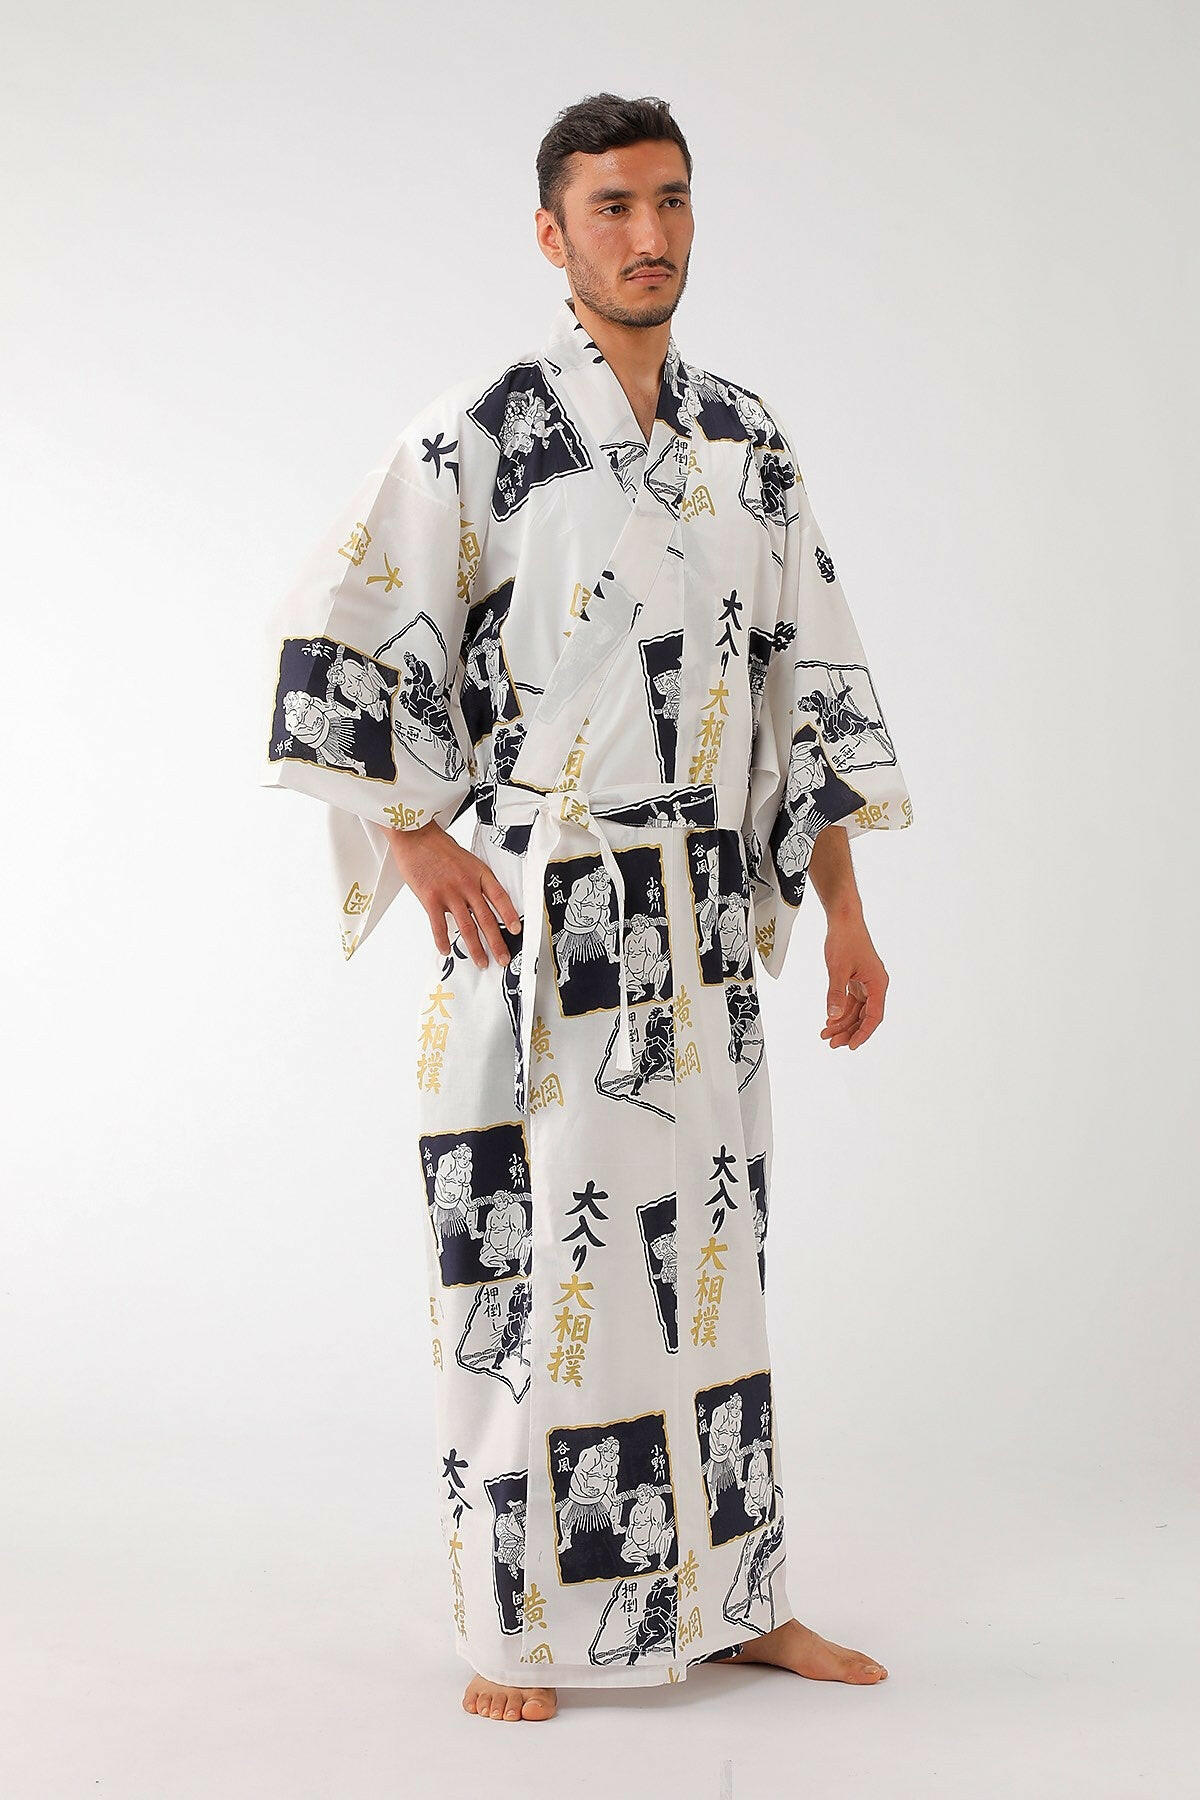 Men SUMO Wrestler Cotton Yukata Kimono Color White Model Side View